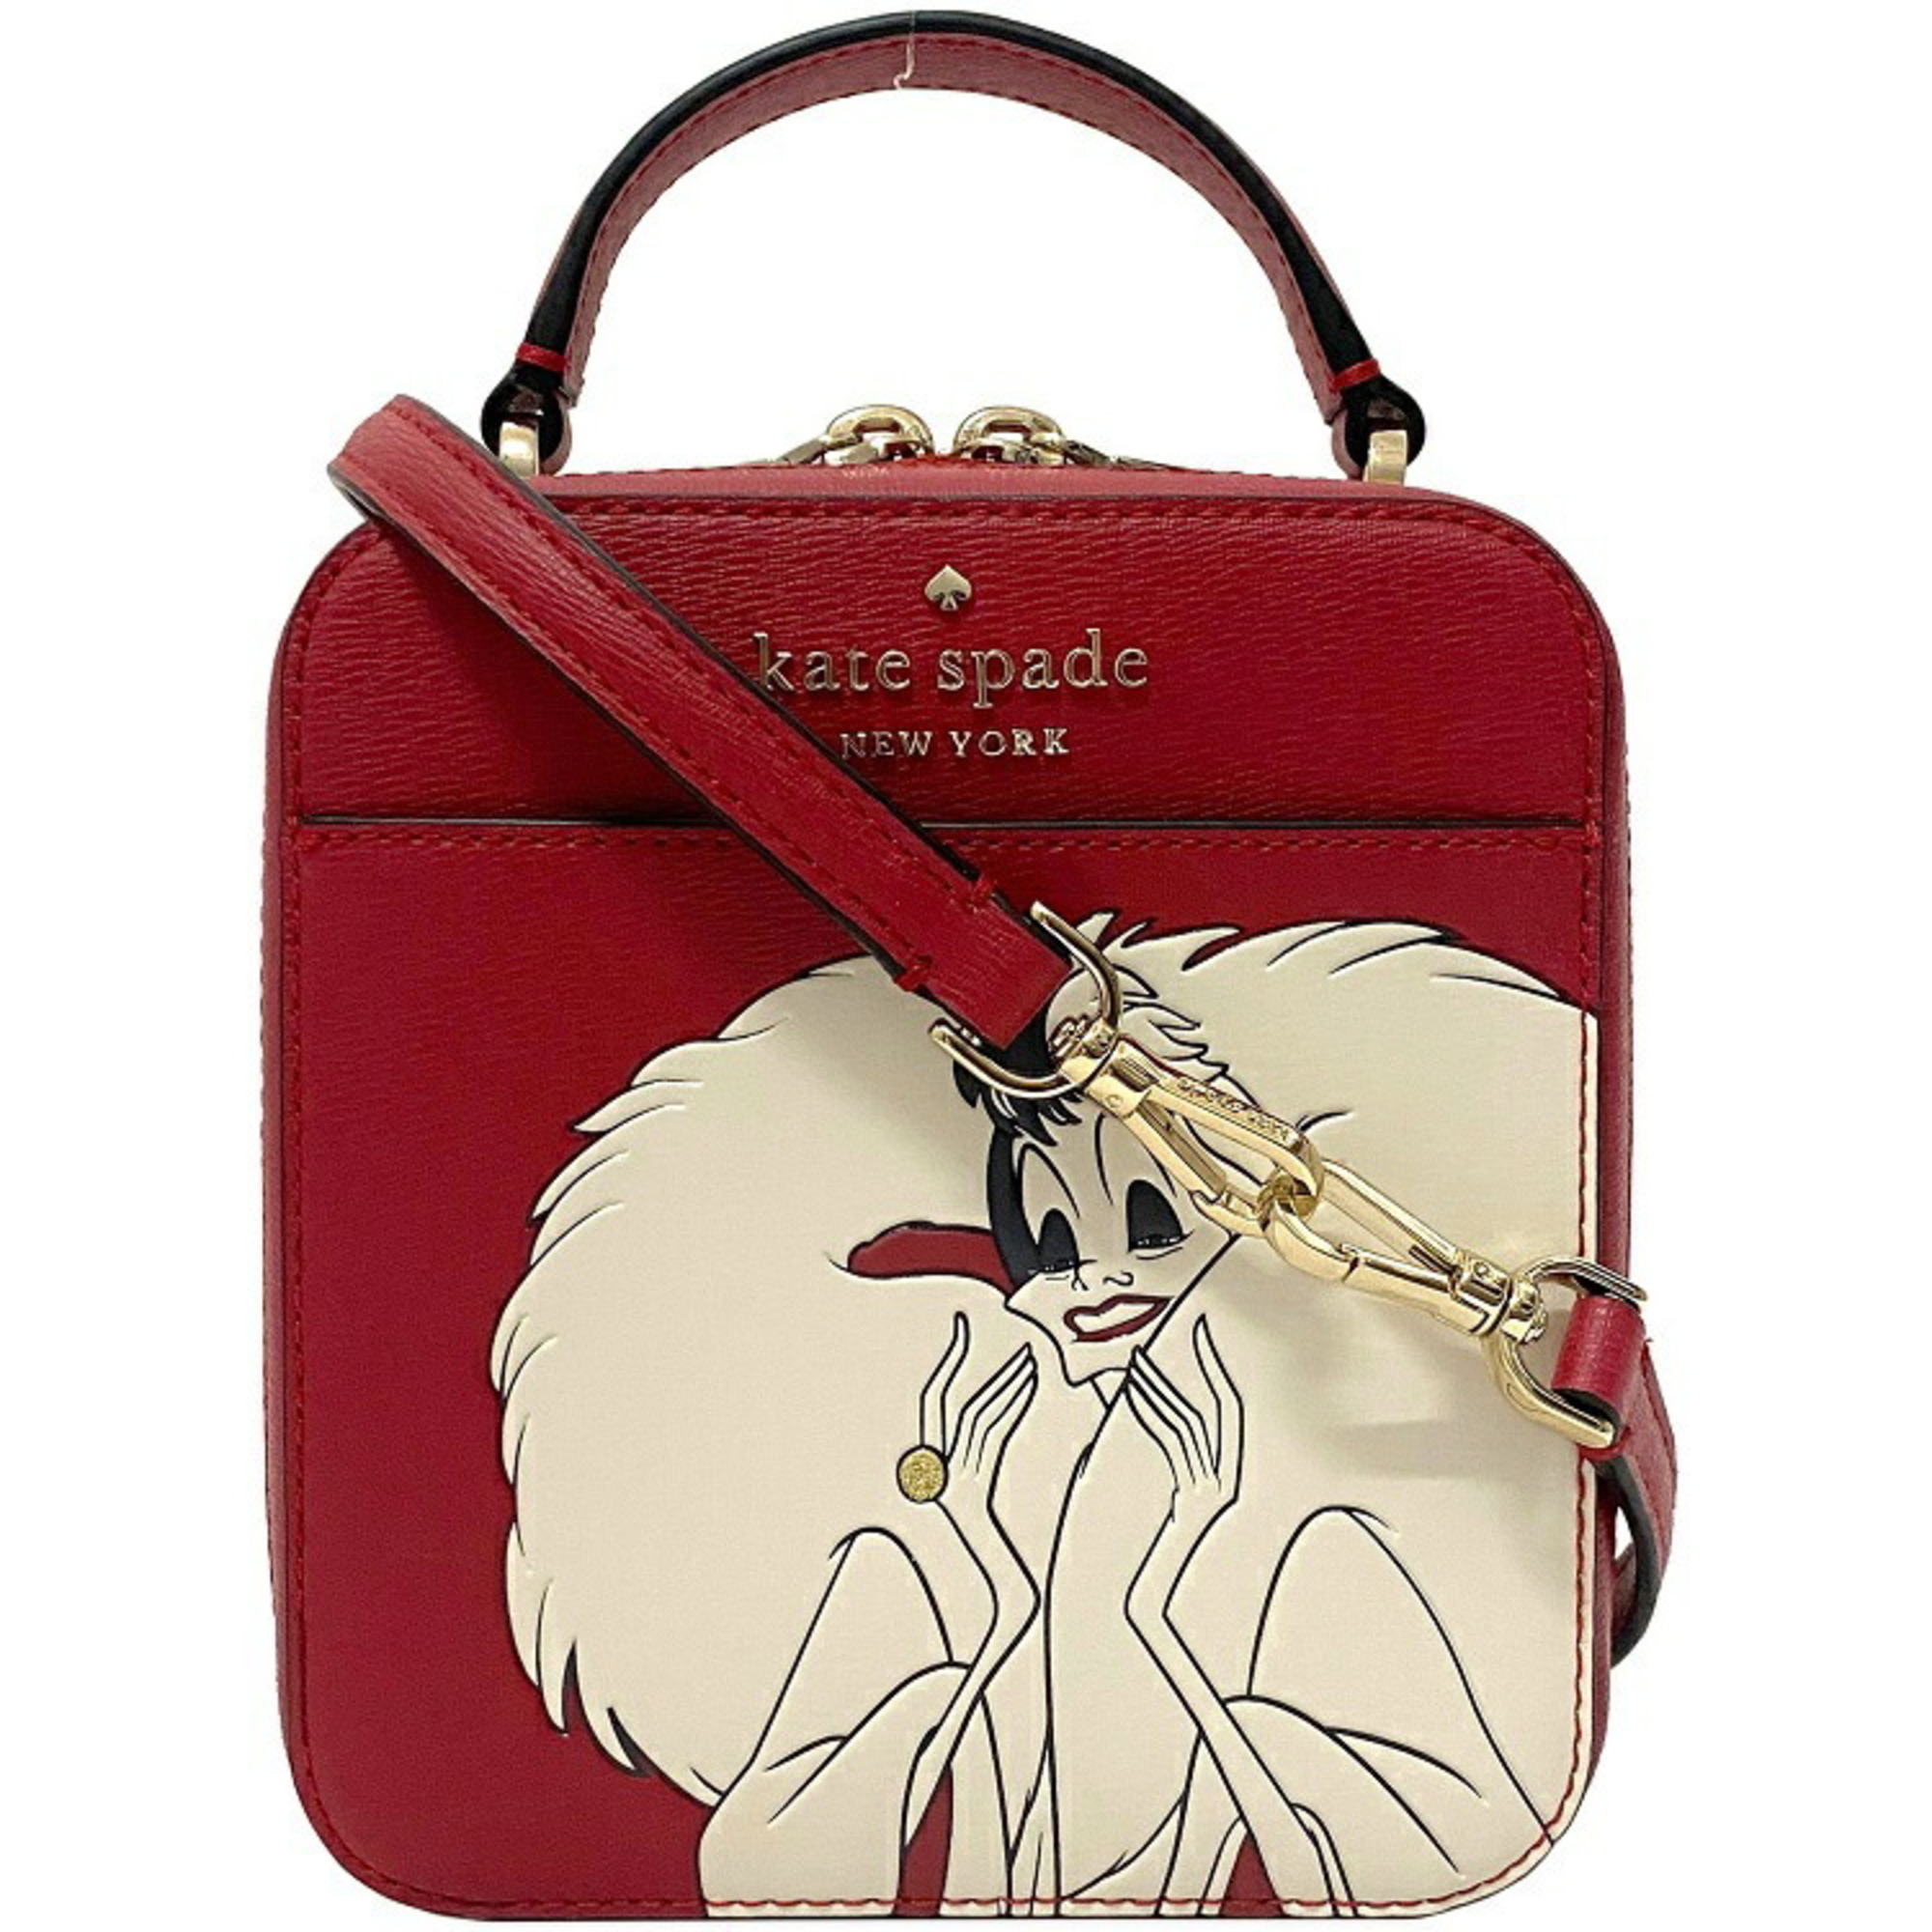 Kate spade 2way bag red white gold Disney K8097 leather kate ...